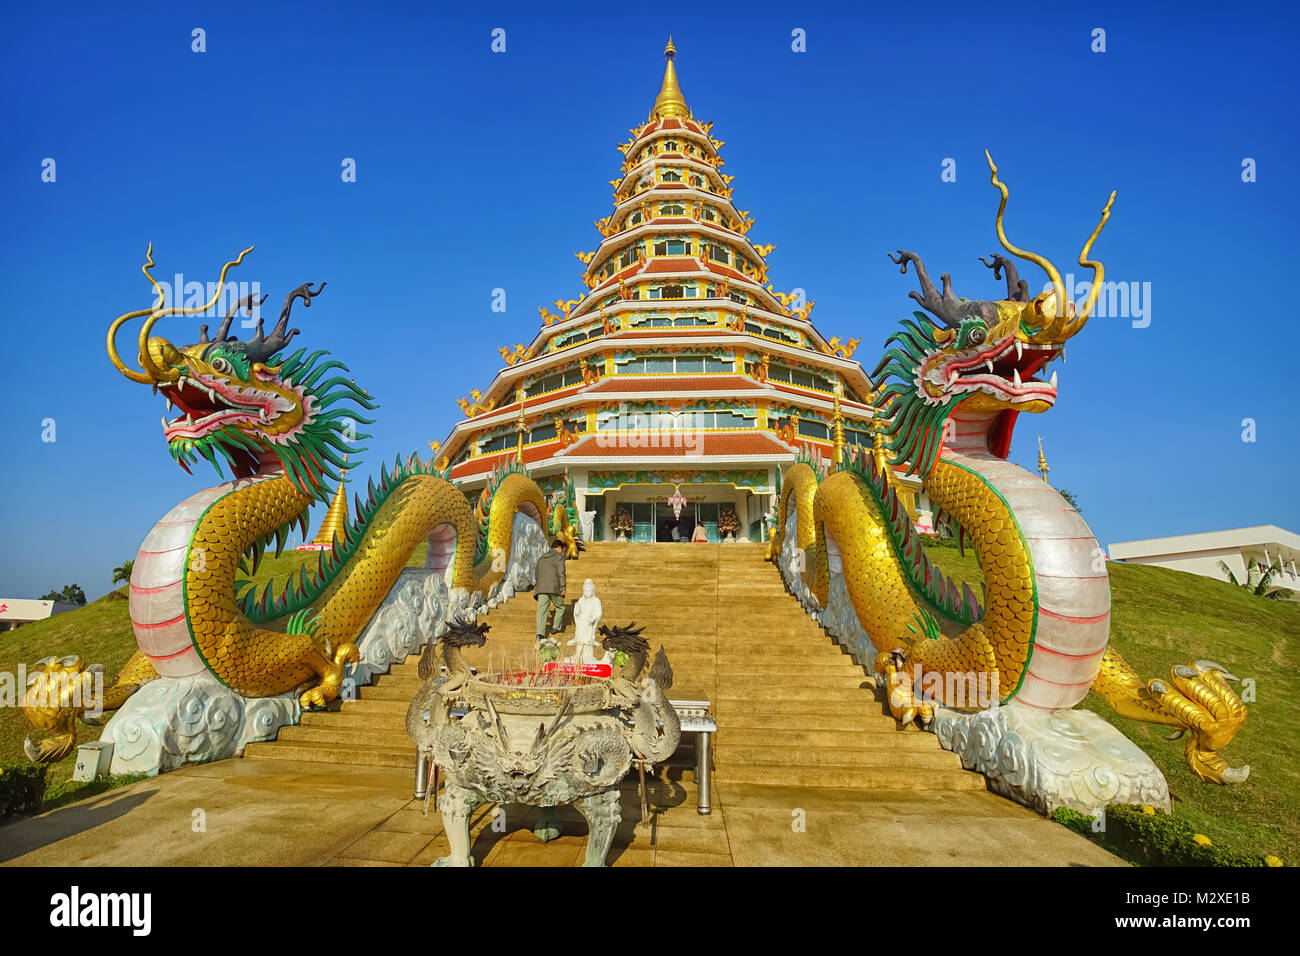 CHIANG RAI, Tailandia - 24 dicembre 2017 : stile cinese pagoda e draghi all'entrata in Wat Huay pla kang tempio nella provincia di Chiang Rai, Tailandia Foto Stock